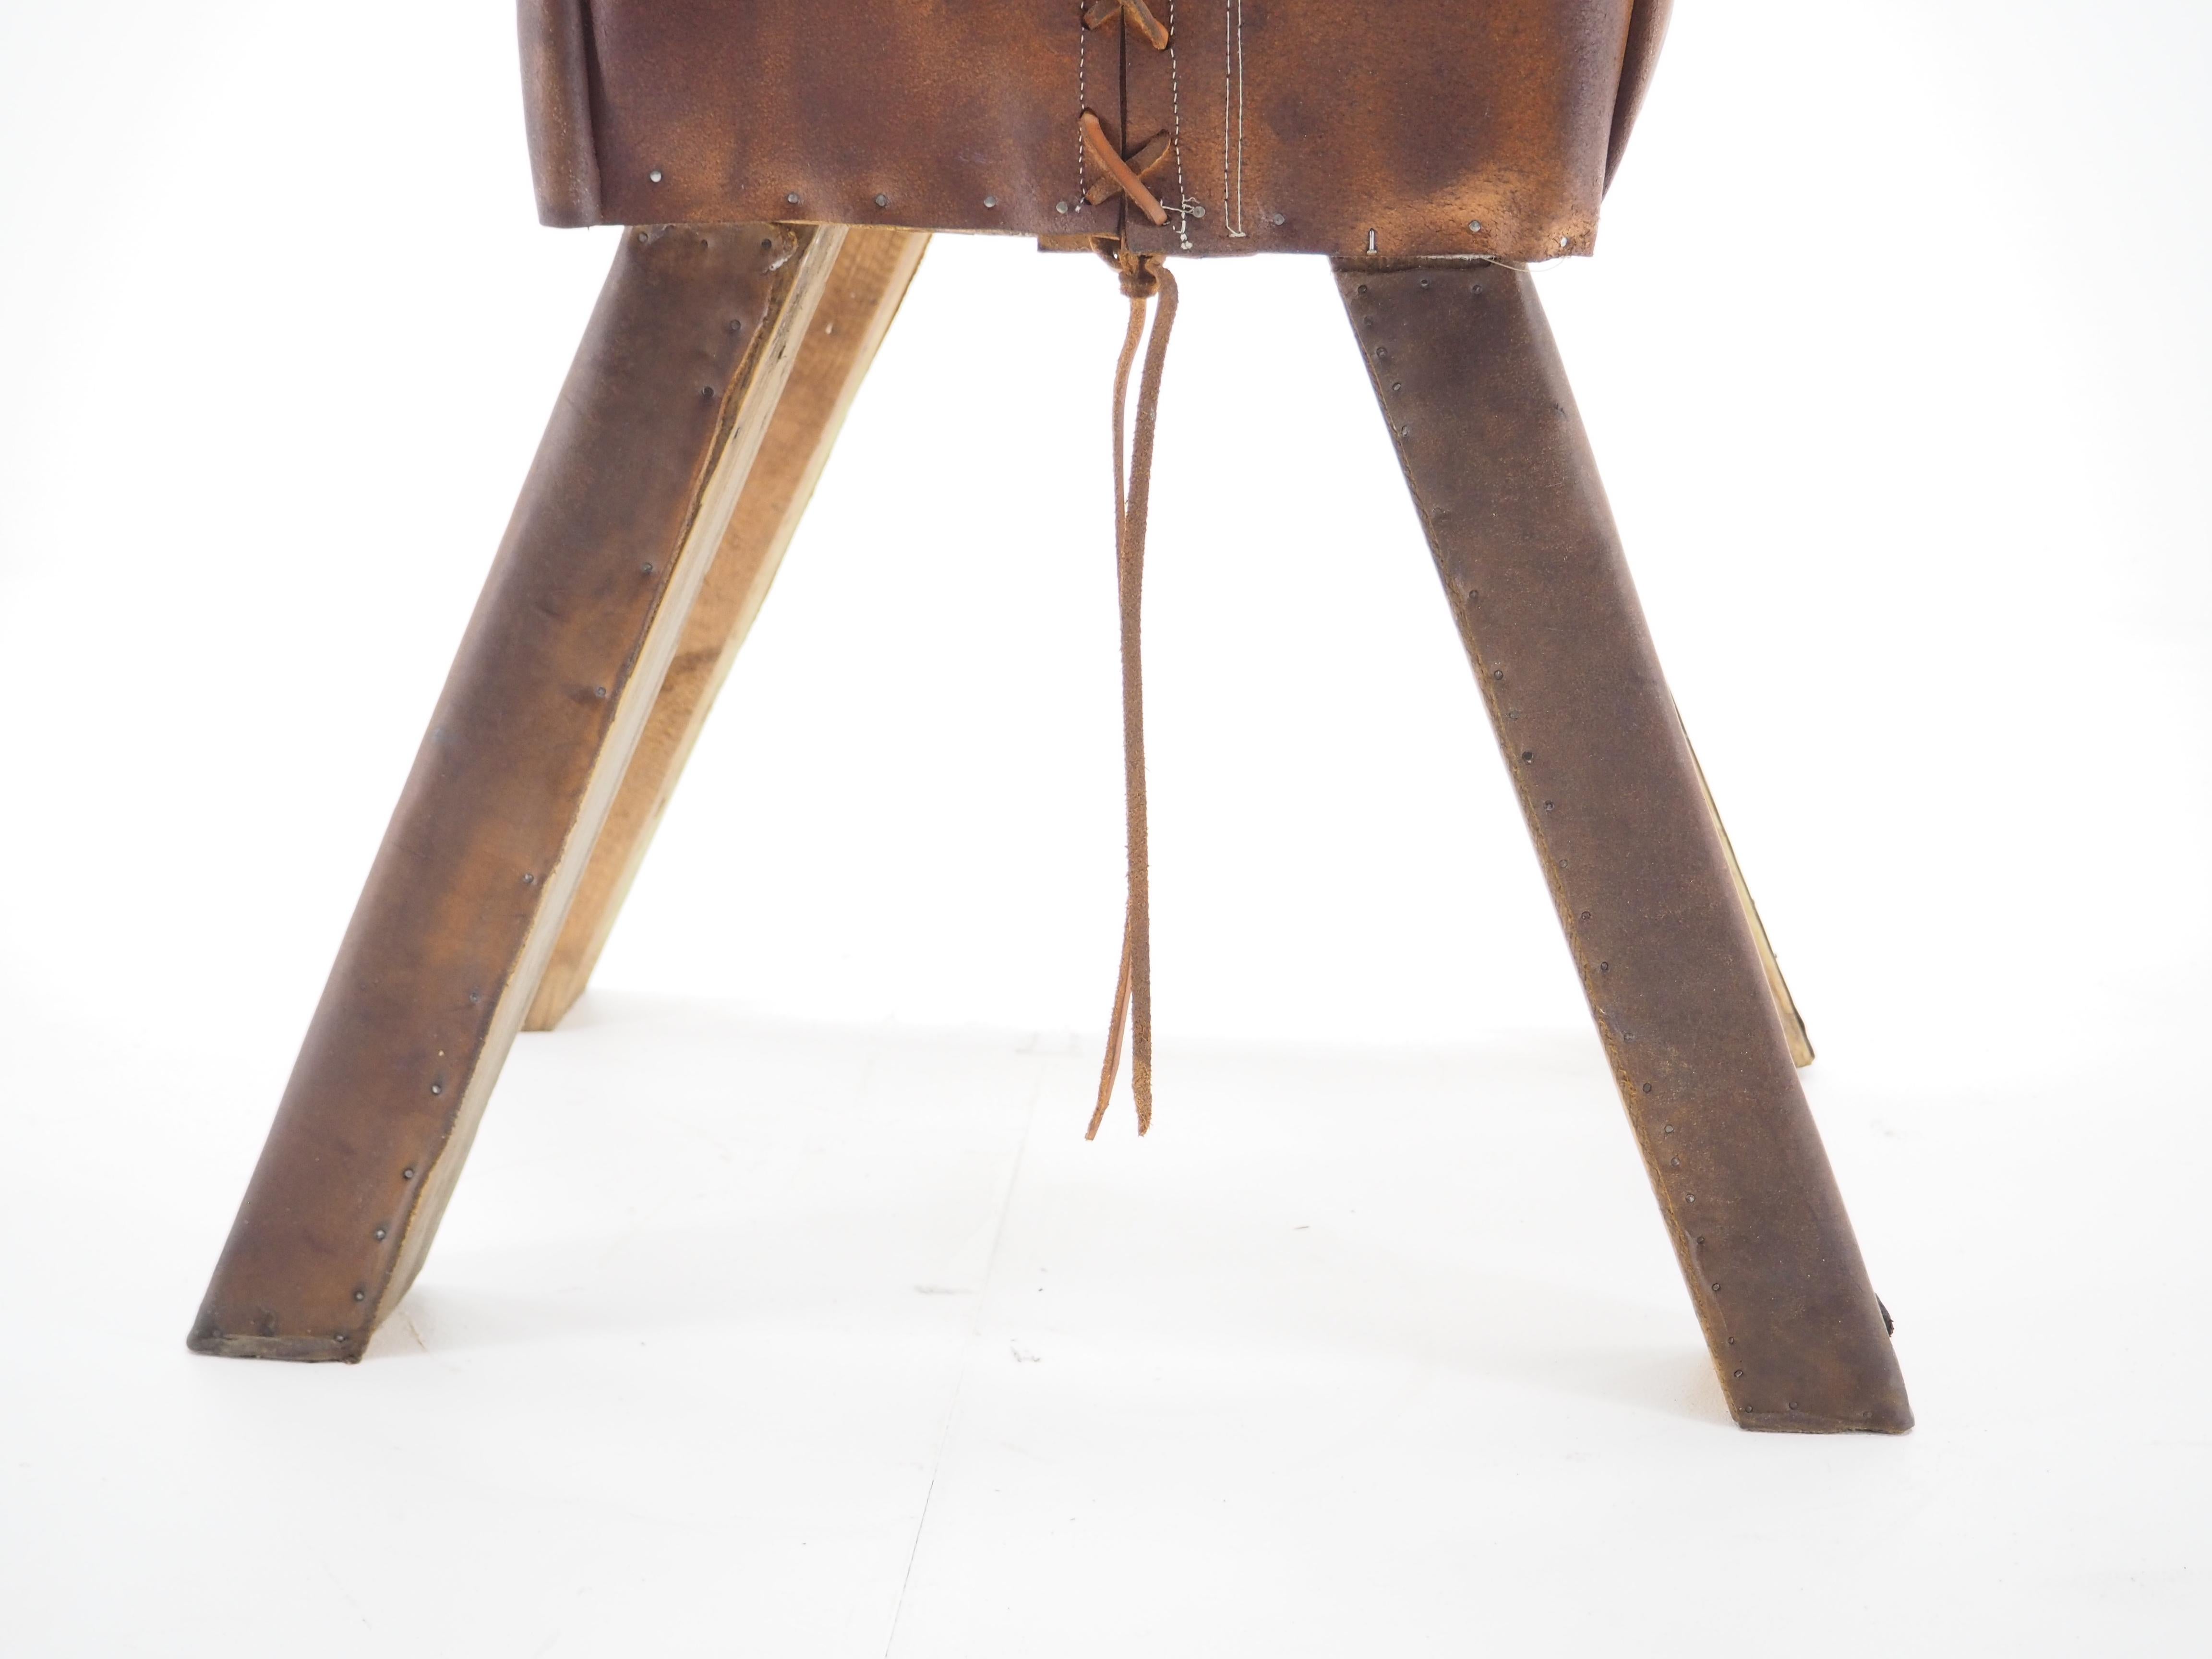  Stylish Industrial Leather Gymnastic Seat/Decoration/Aid 1